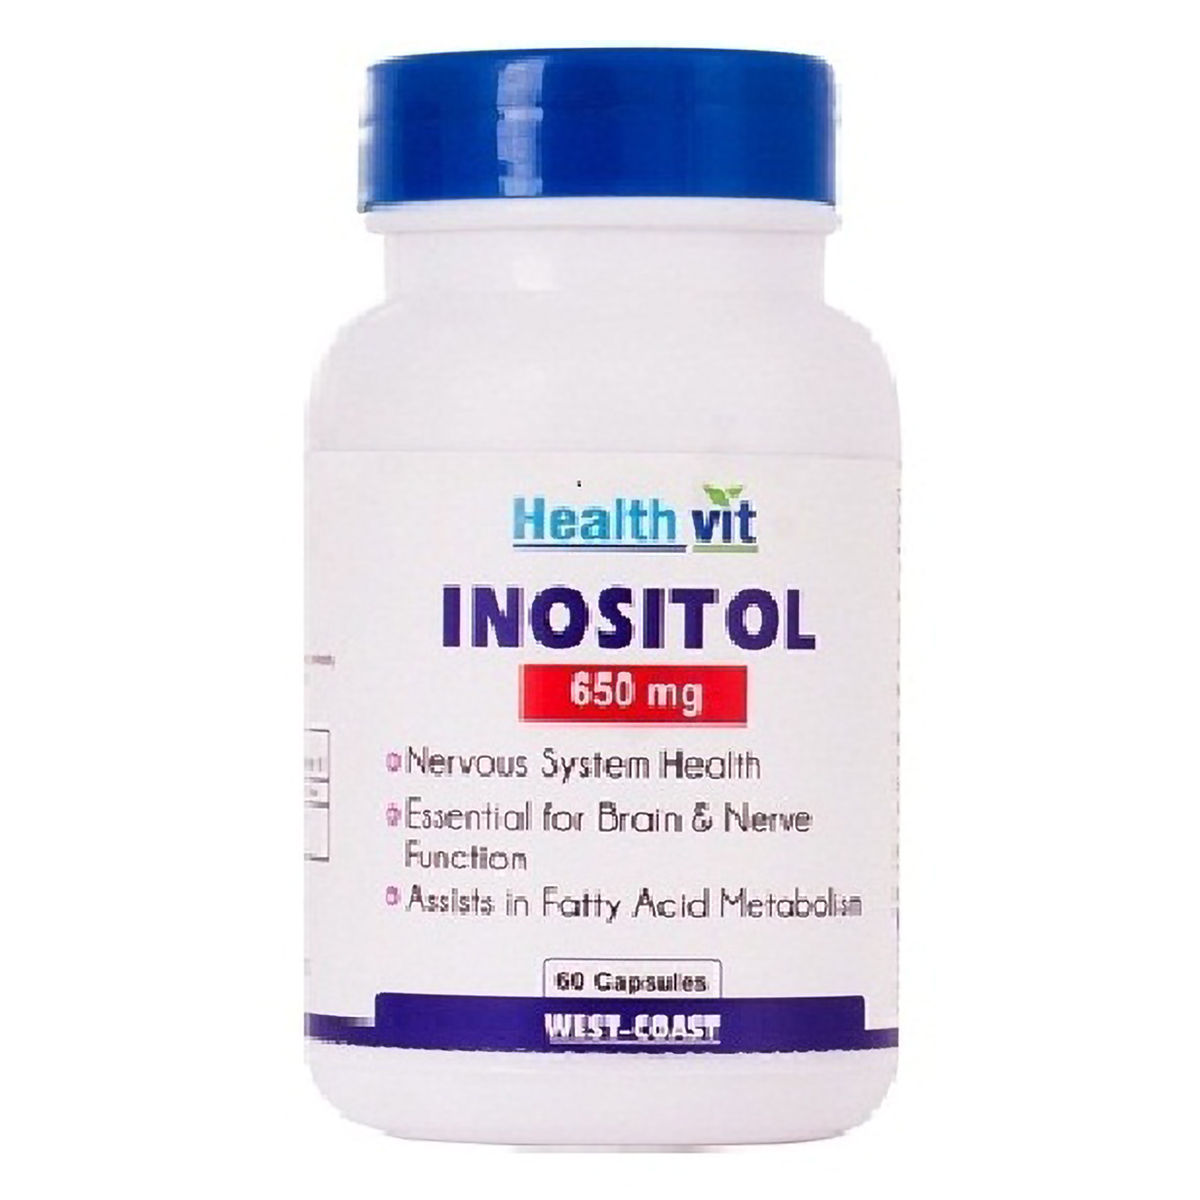 Buy Healthvit Inositol 650 mg, 60 Capsules Online